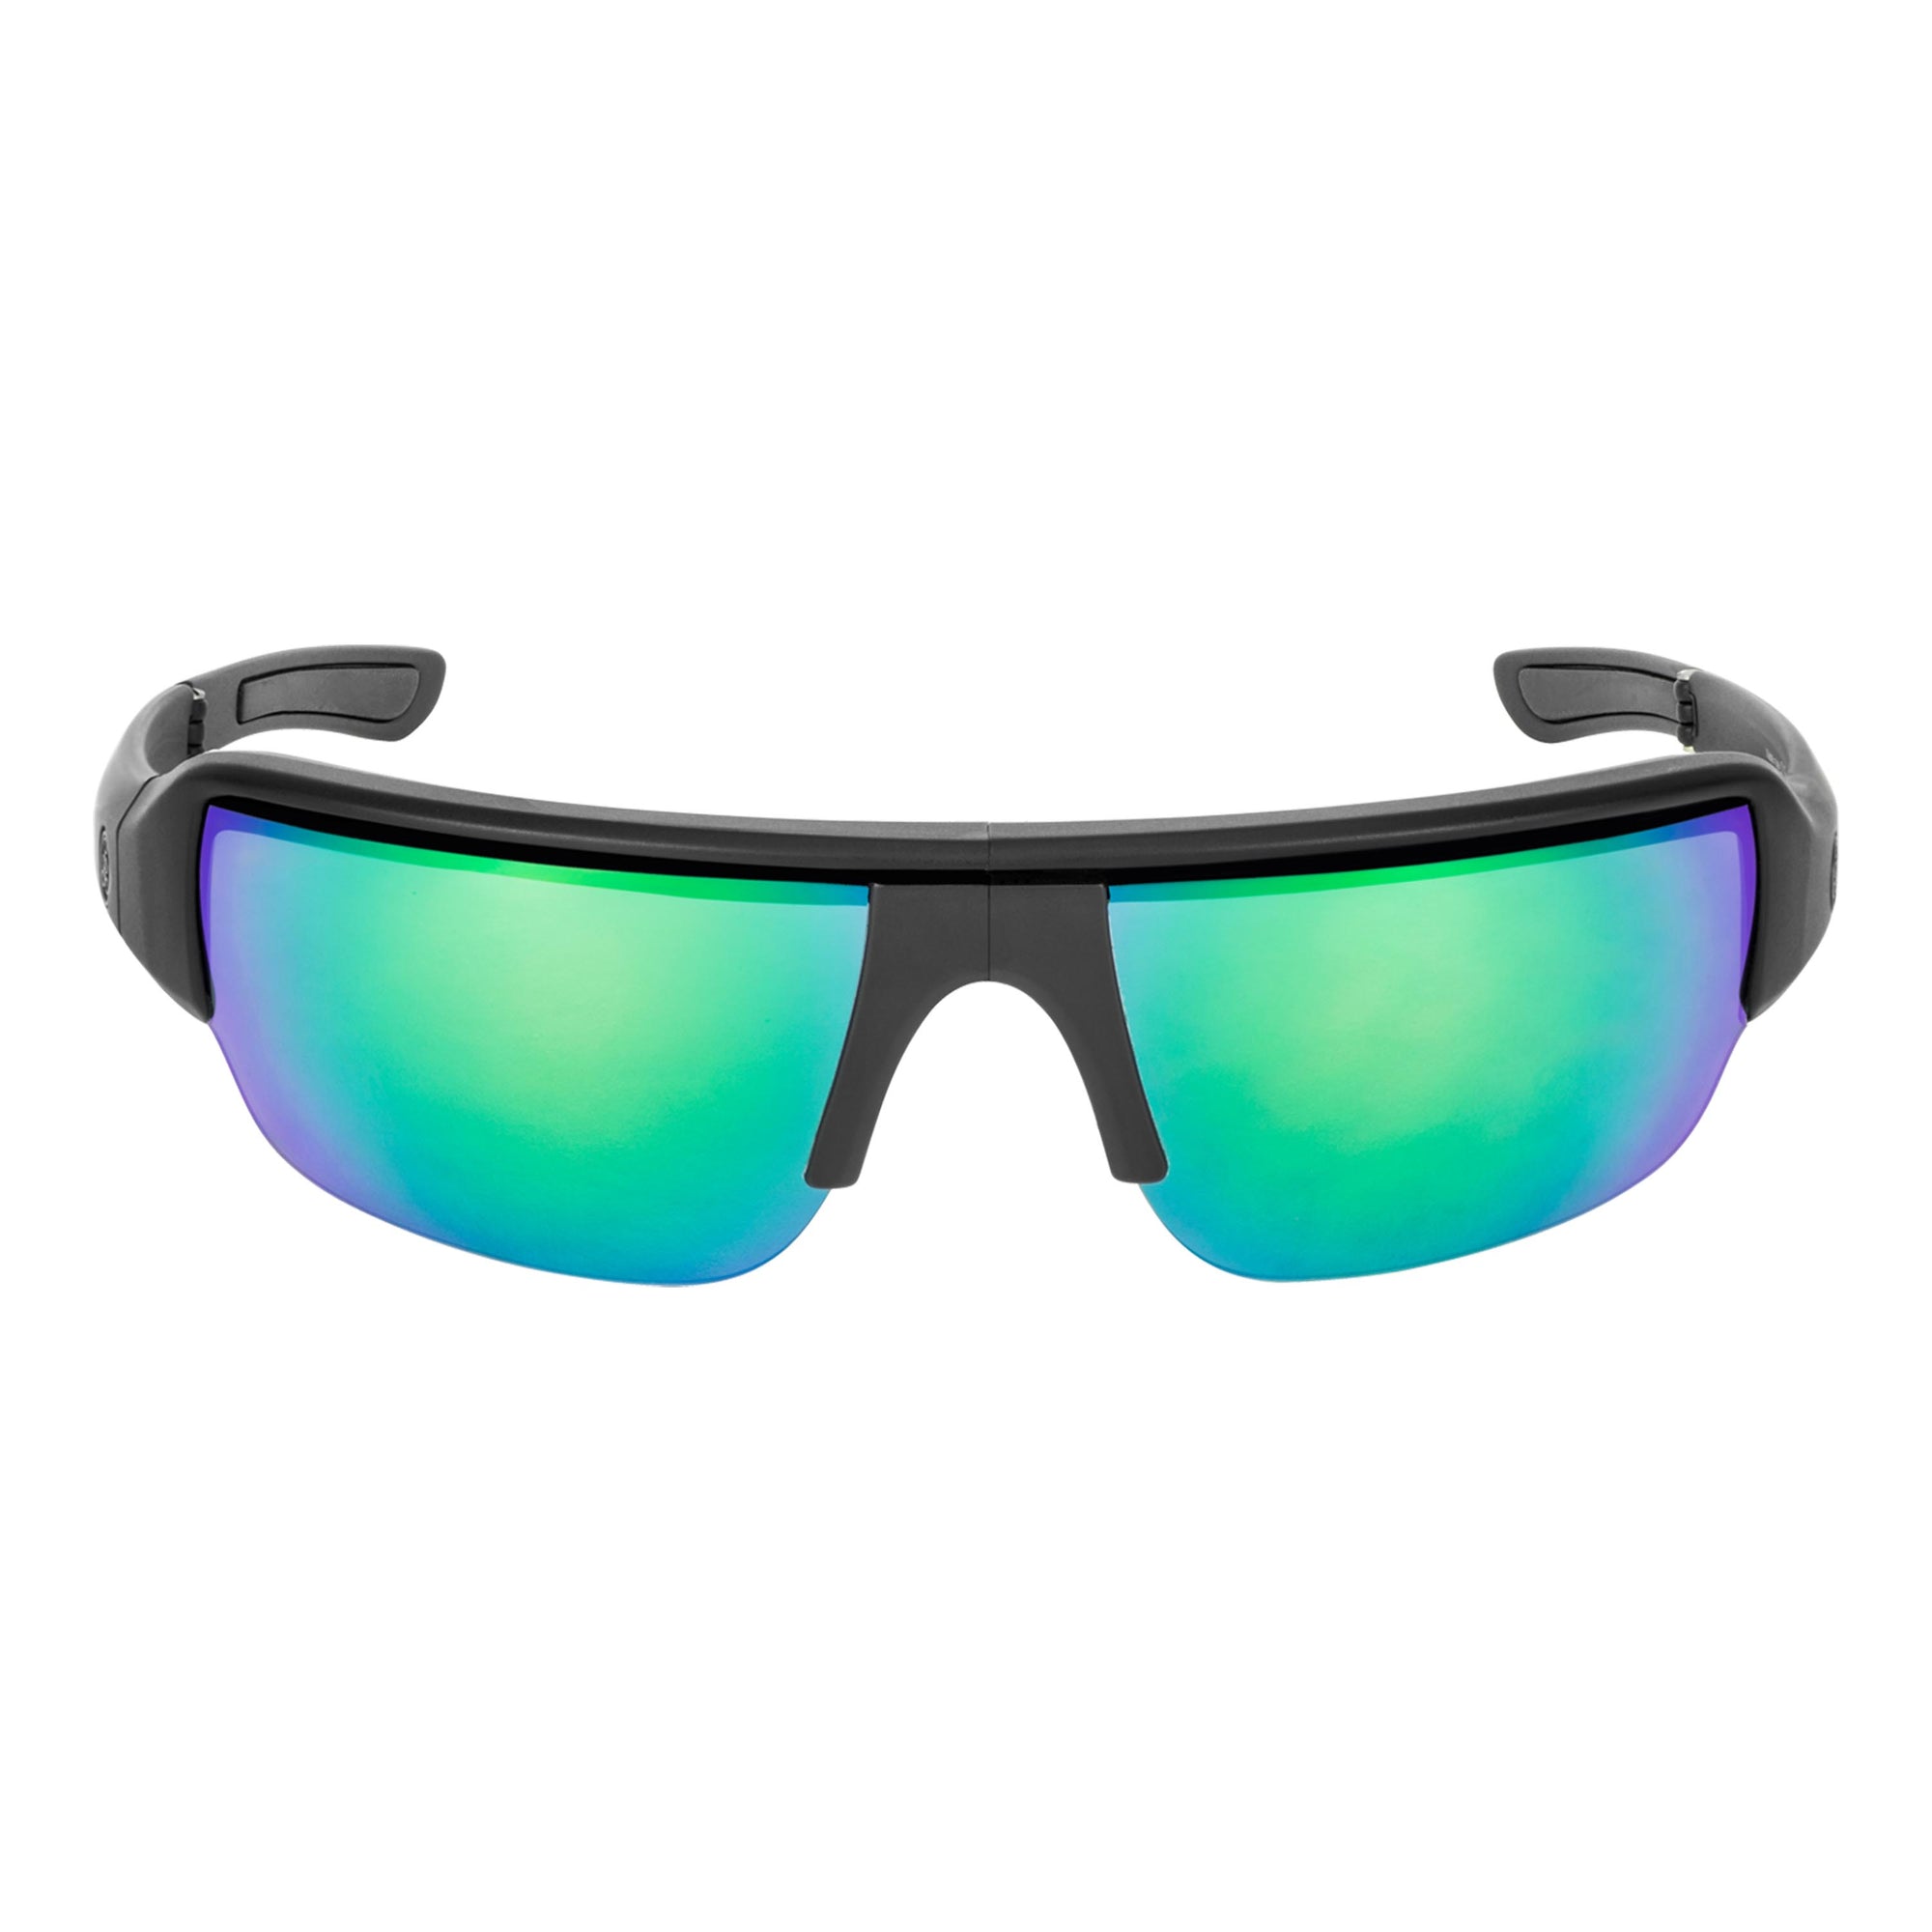 Popticals, Premium Compact Sunglasses, PopGun, 010010-BMEN, Polarized Sunglasses, Matte Black Frame, Gray Lenses w/Green Mirror, Glam View